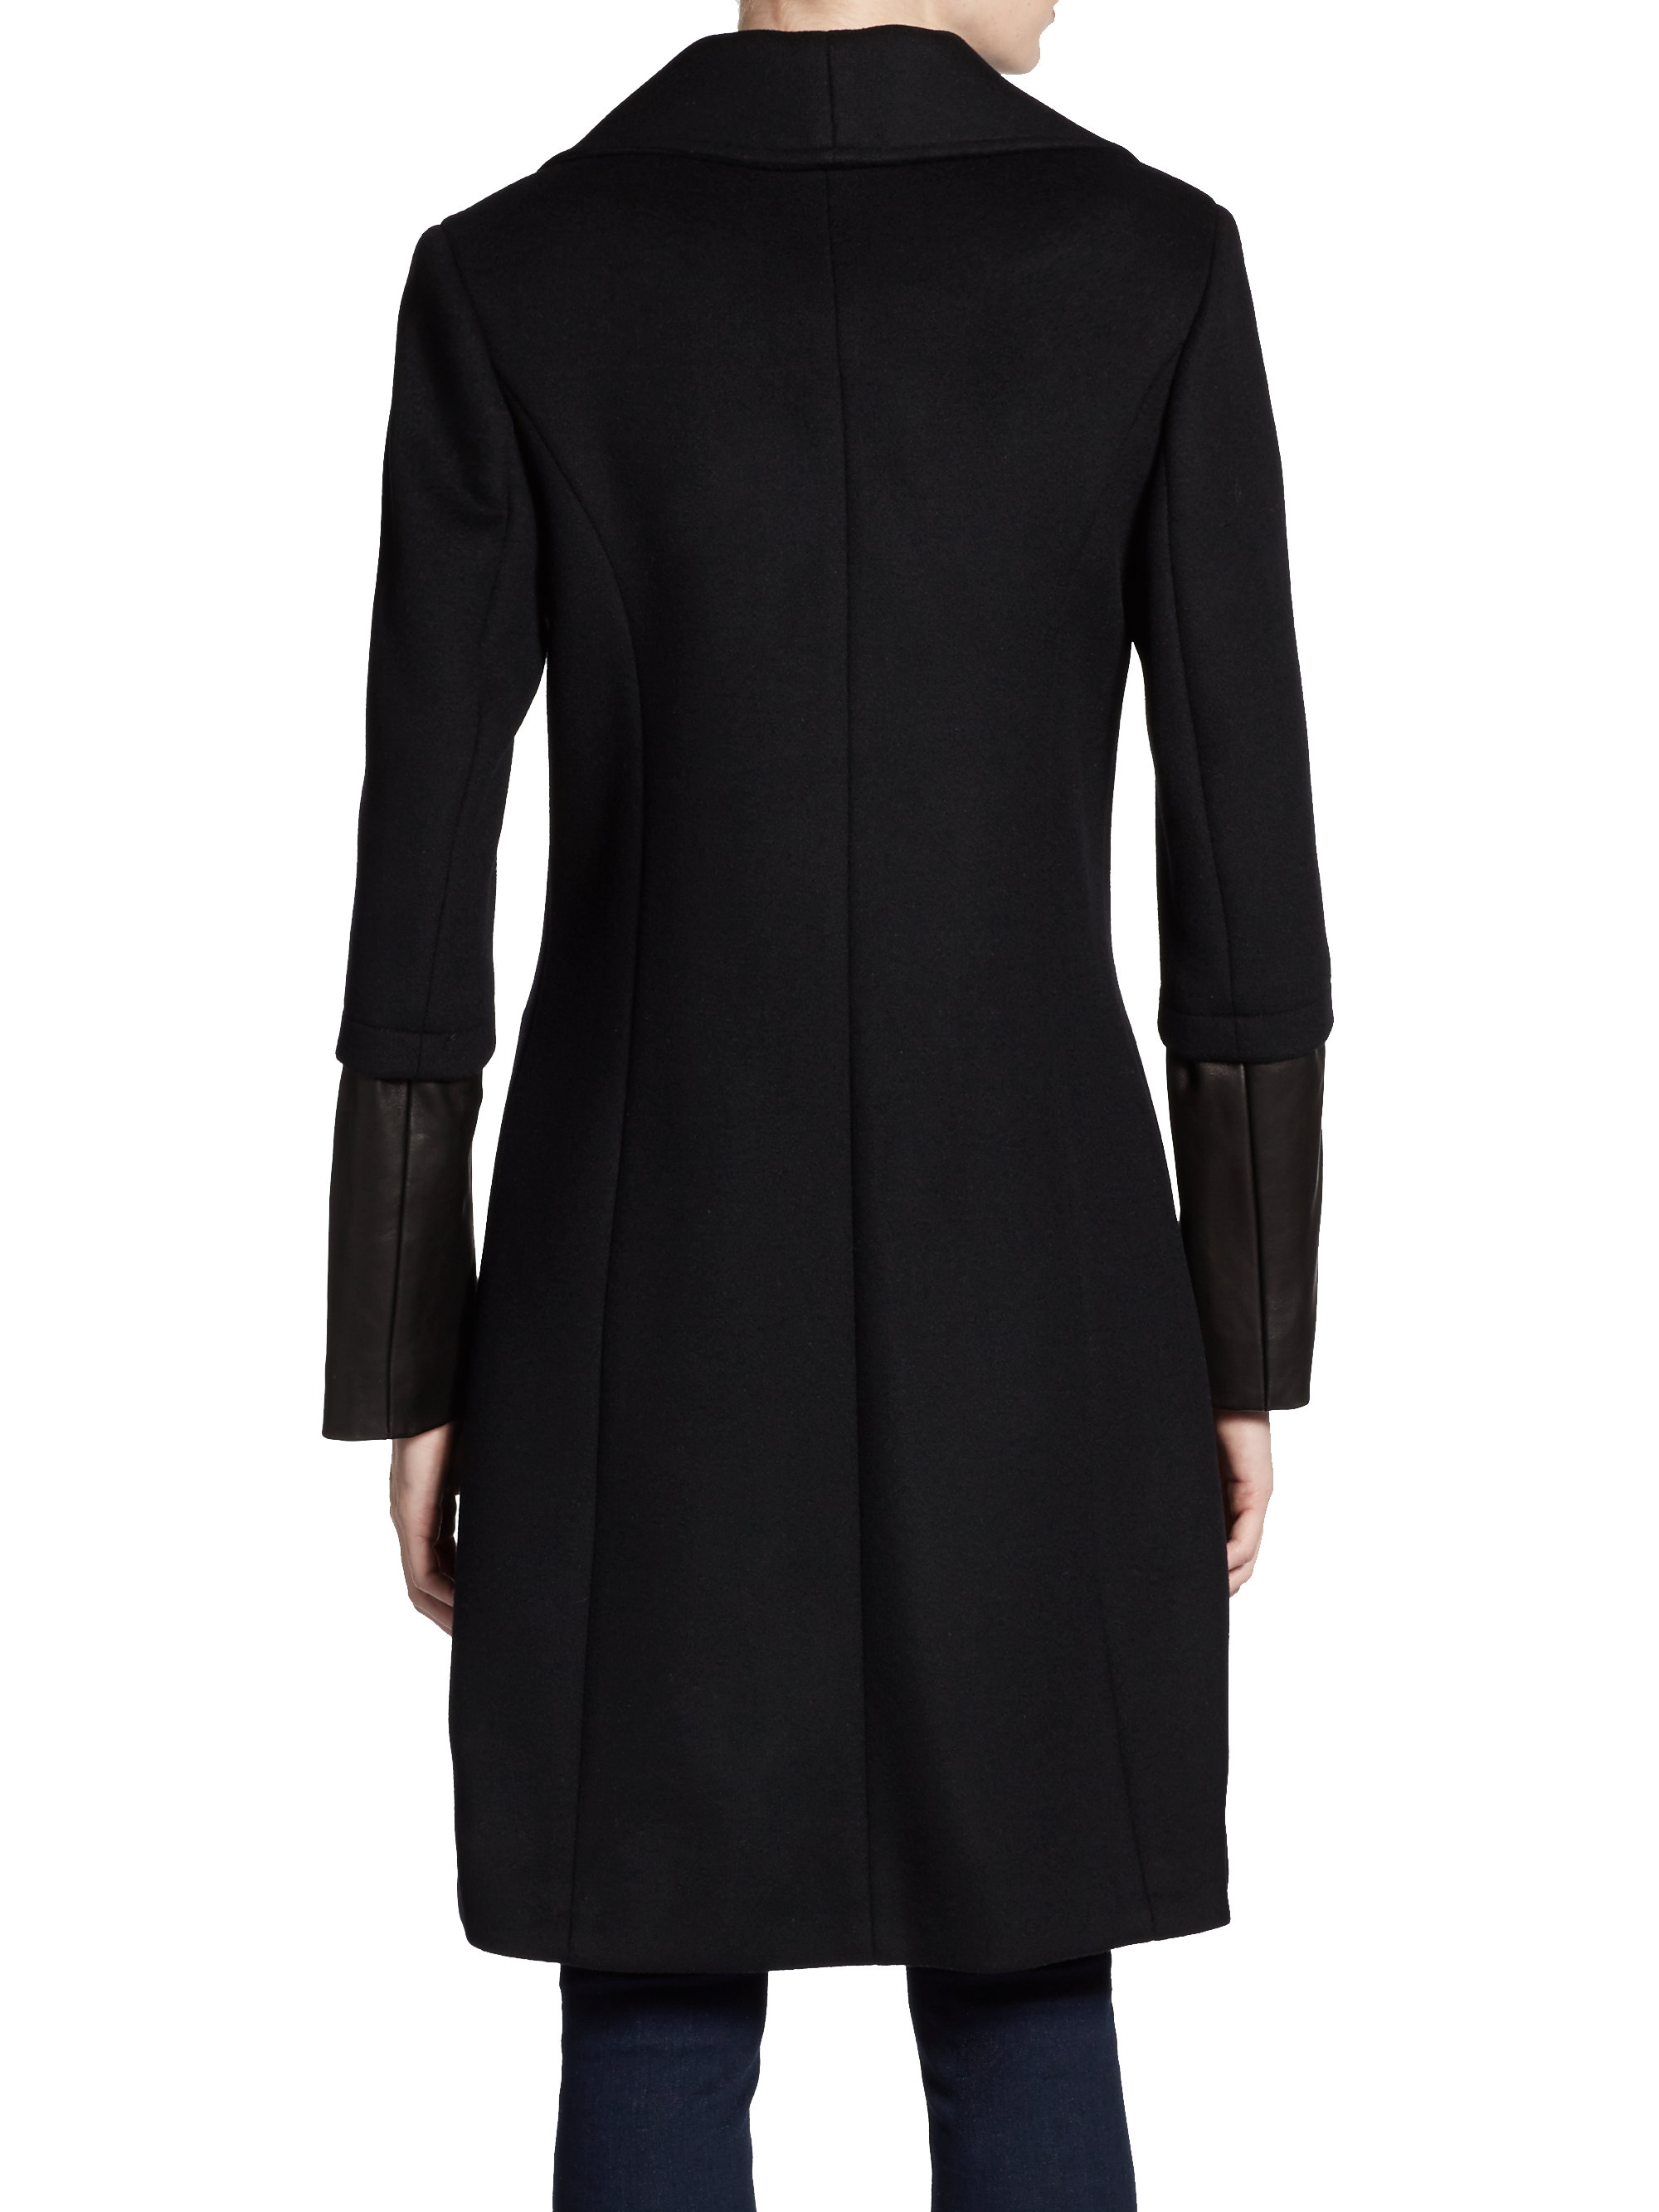 Lyst - Elie Tahari Carlotta Leather Sleeve Swing Coat in Black